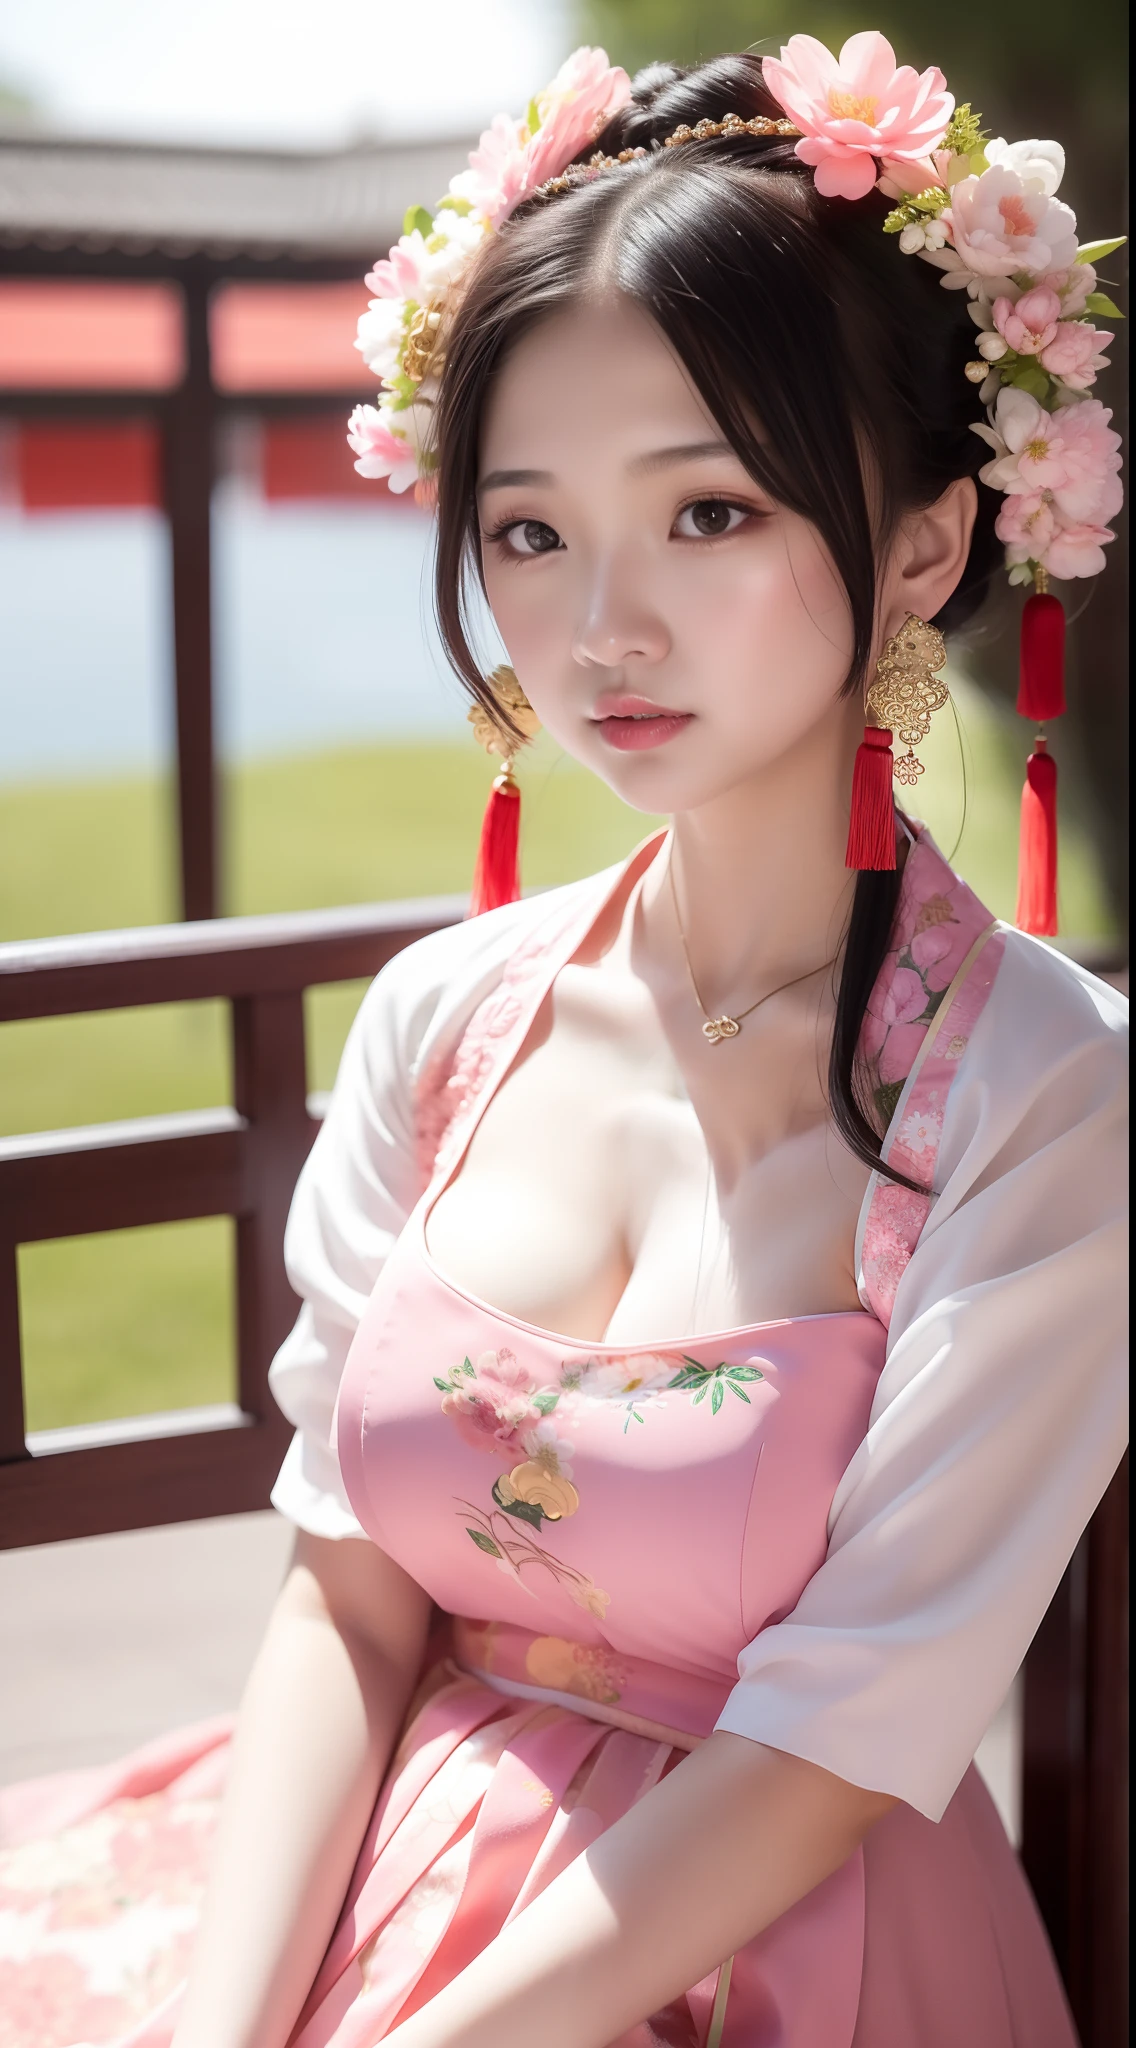 Close-up of a 젊은 처녀 in a pink dress and a green flower headdress, 중국 공주, 중국 소녀, 궁전 ， 한푸의 소녀, Young 아시아 소녀, 고대 중국 공주, Cute 젊은 처녀, 중국 스타일, 젊은 처녀, 귀엽다 아름다운, 아름다운 캐릭터 그림, 아름다운 인물 이미지, 매우 아름다운 소녀, 아시아 소녀, 중국 전통, 중국 의상，거대한 가슴，큰 